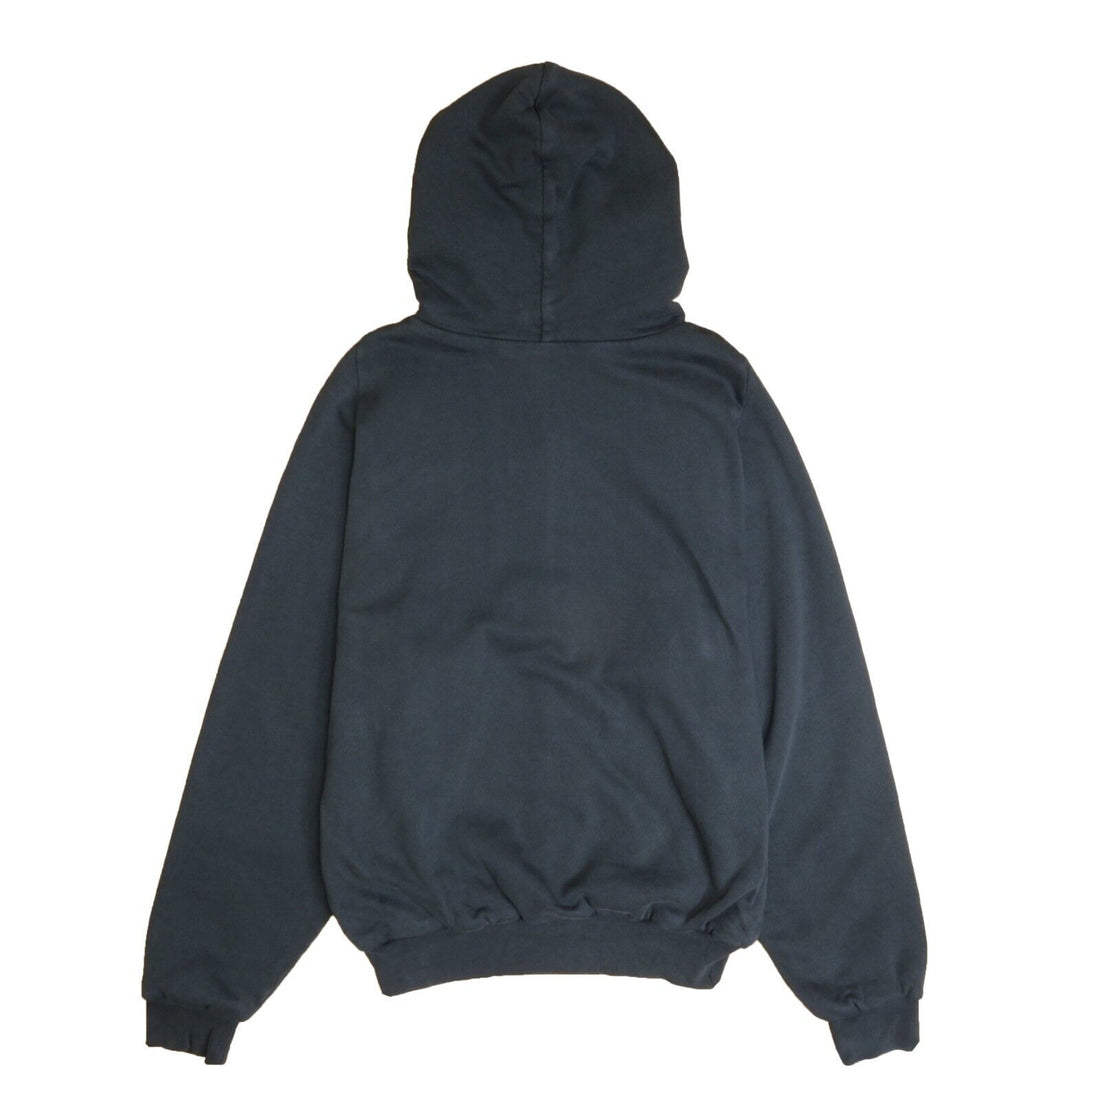 Yeezy Gap Unreleased Zip Sweatshirt Hoodie Size Medium Black